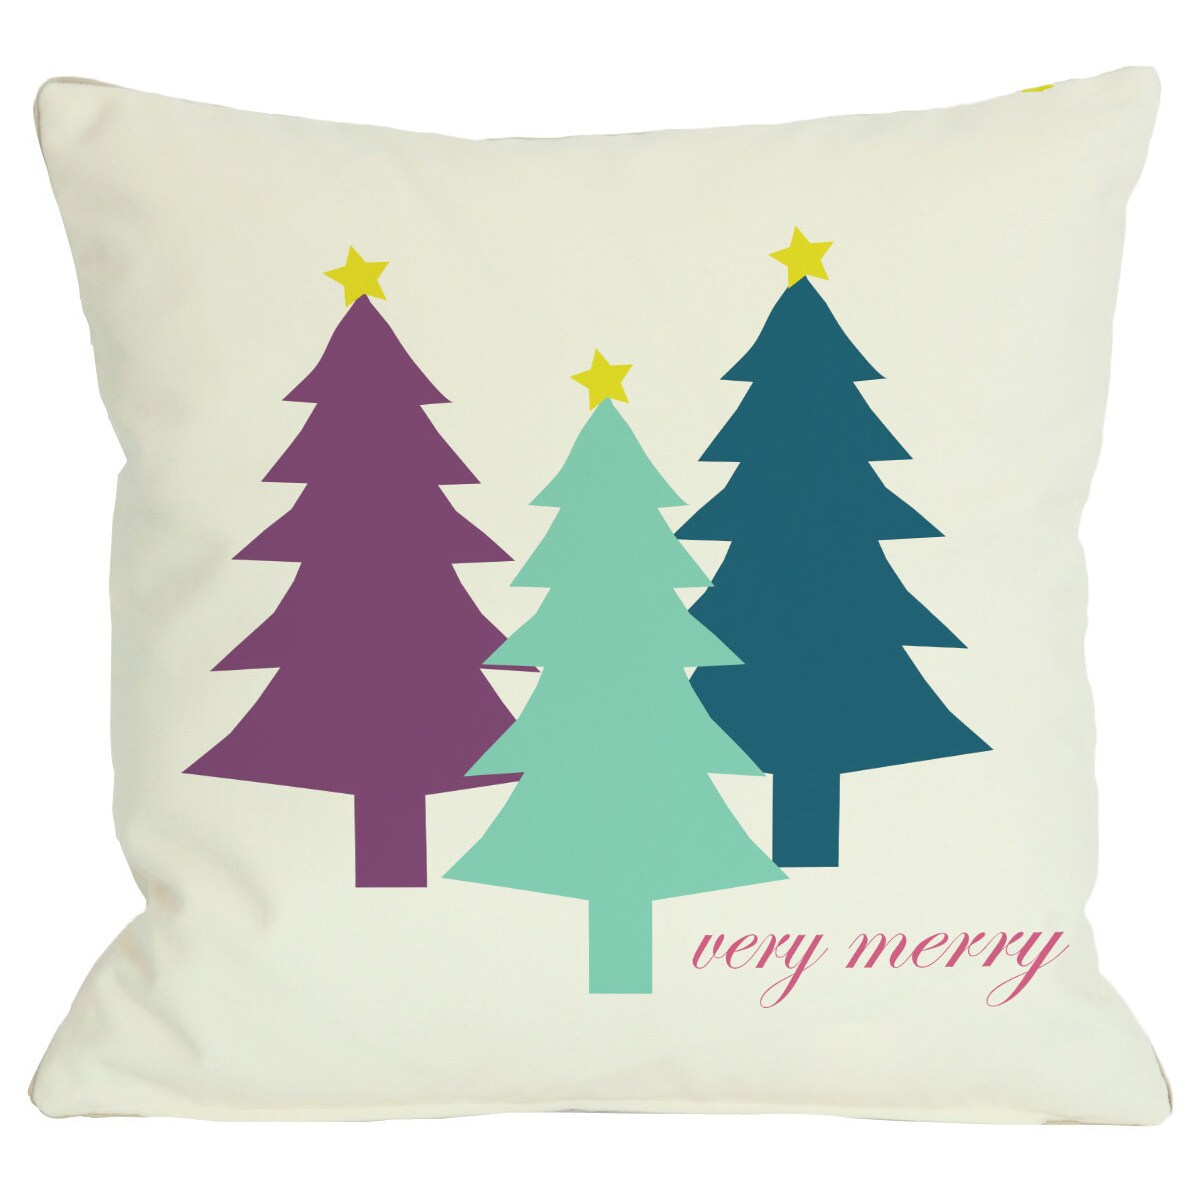 https://ak1.ostkcdn.com/images/products/8441429/Very-Merry-Christmas-Trees-Reversible-Throw-Pillow-a2d25660-2bdb-48c7-a9ca-51cb71beb9bd.jpg